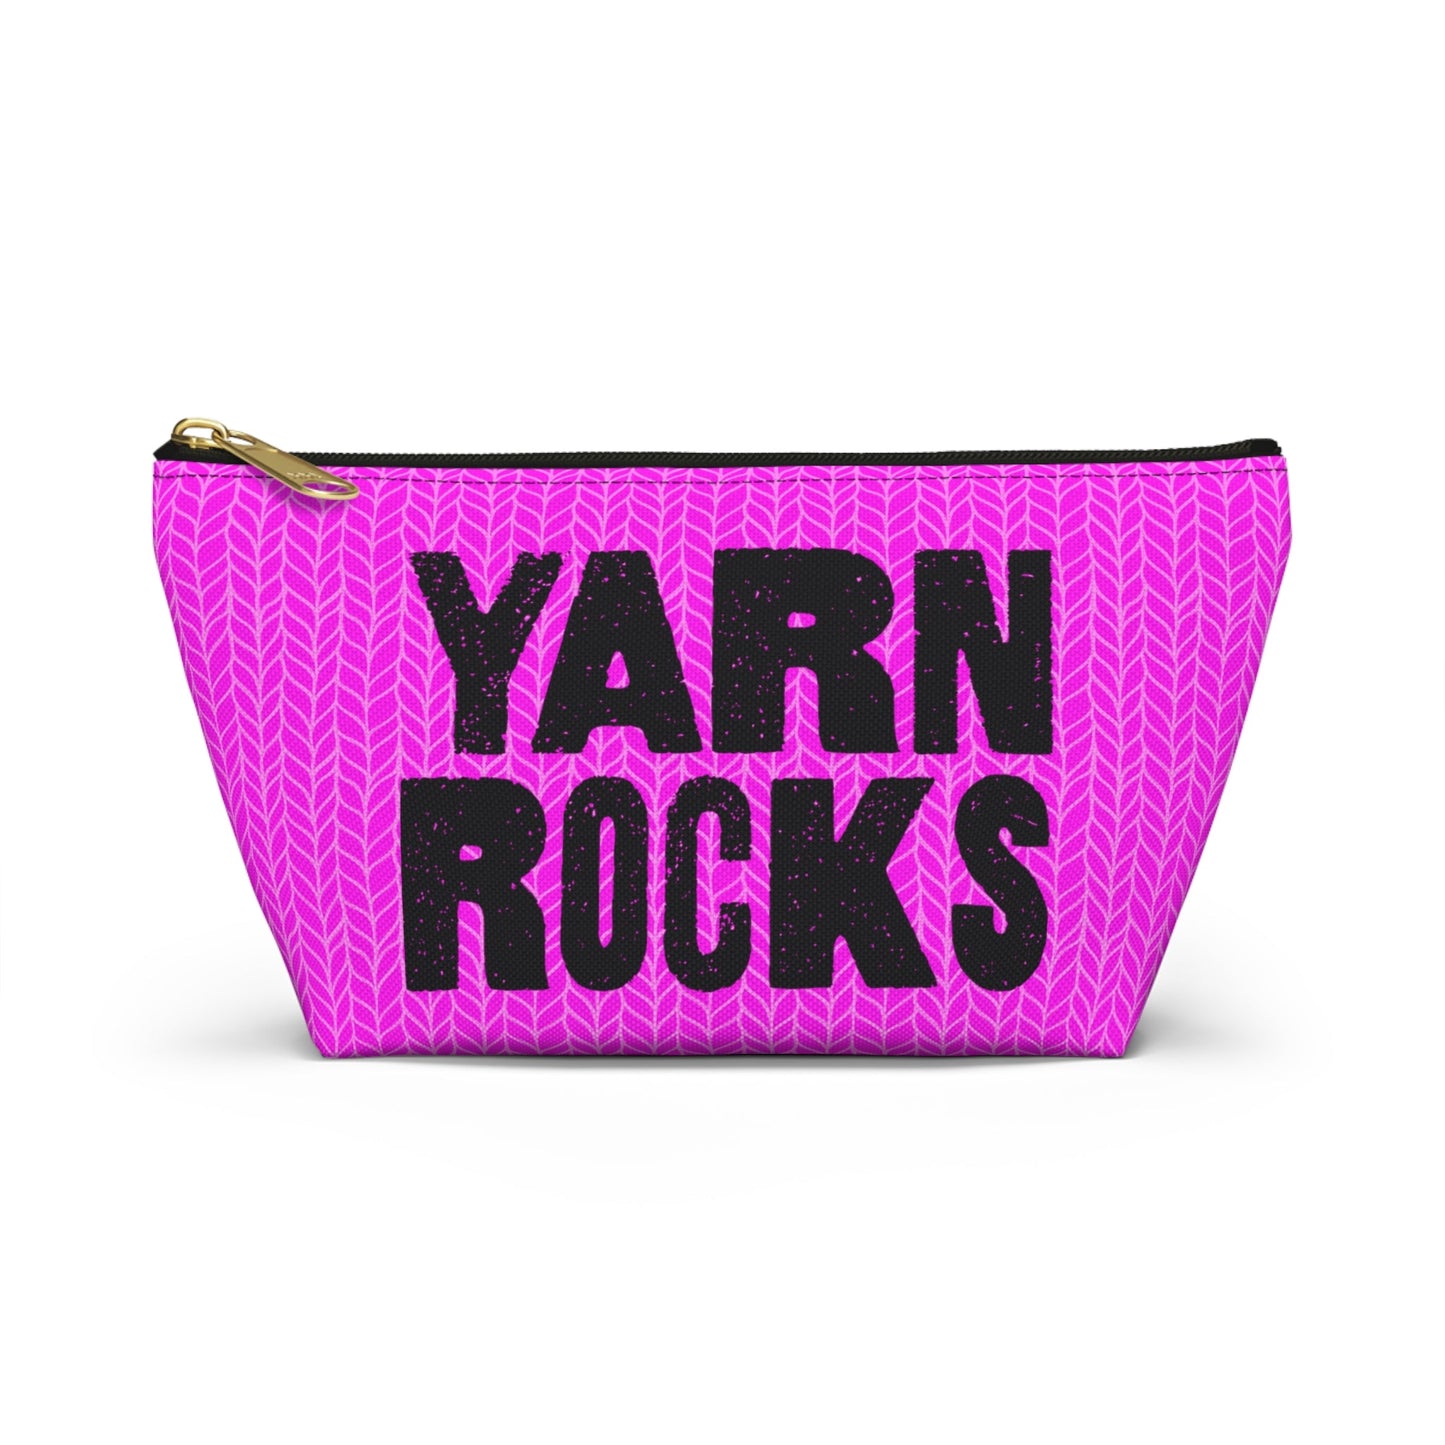 Yarn Rocks Zippered Project Bags